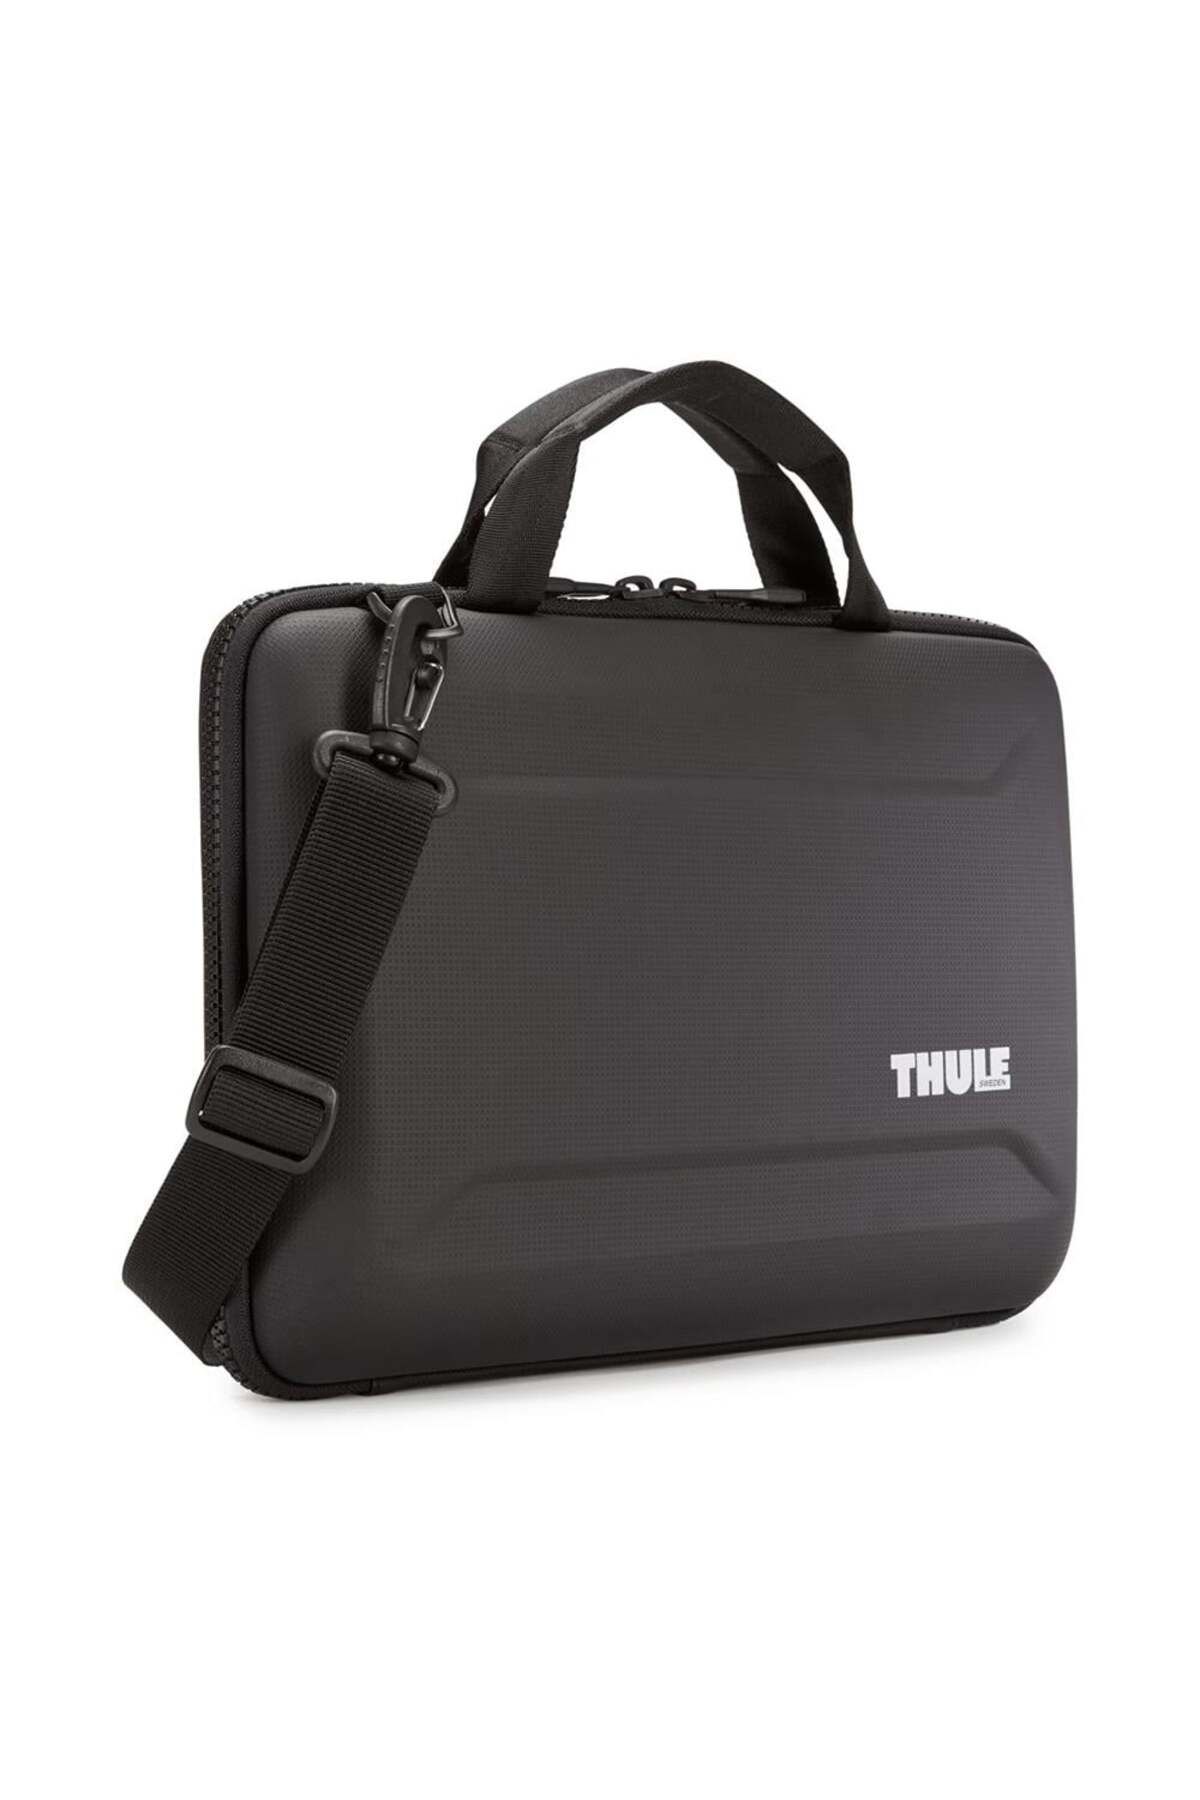 Thule Gauntlet 4 MacBook Pro Çantası 14" - Siyah